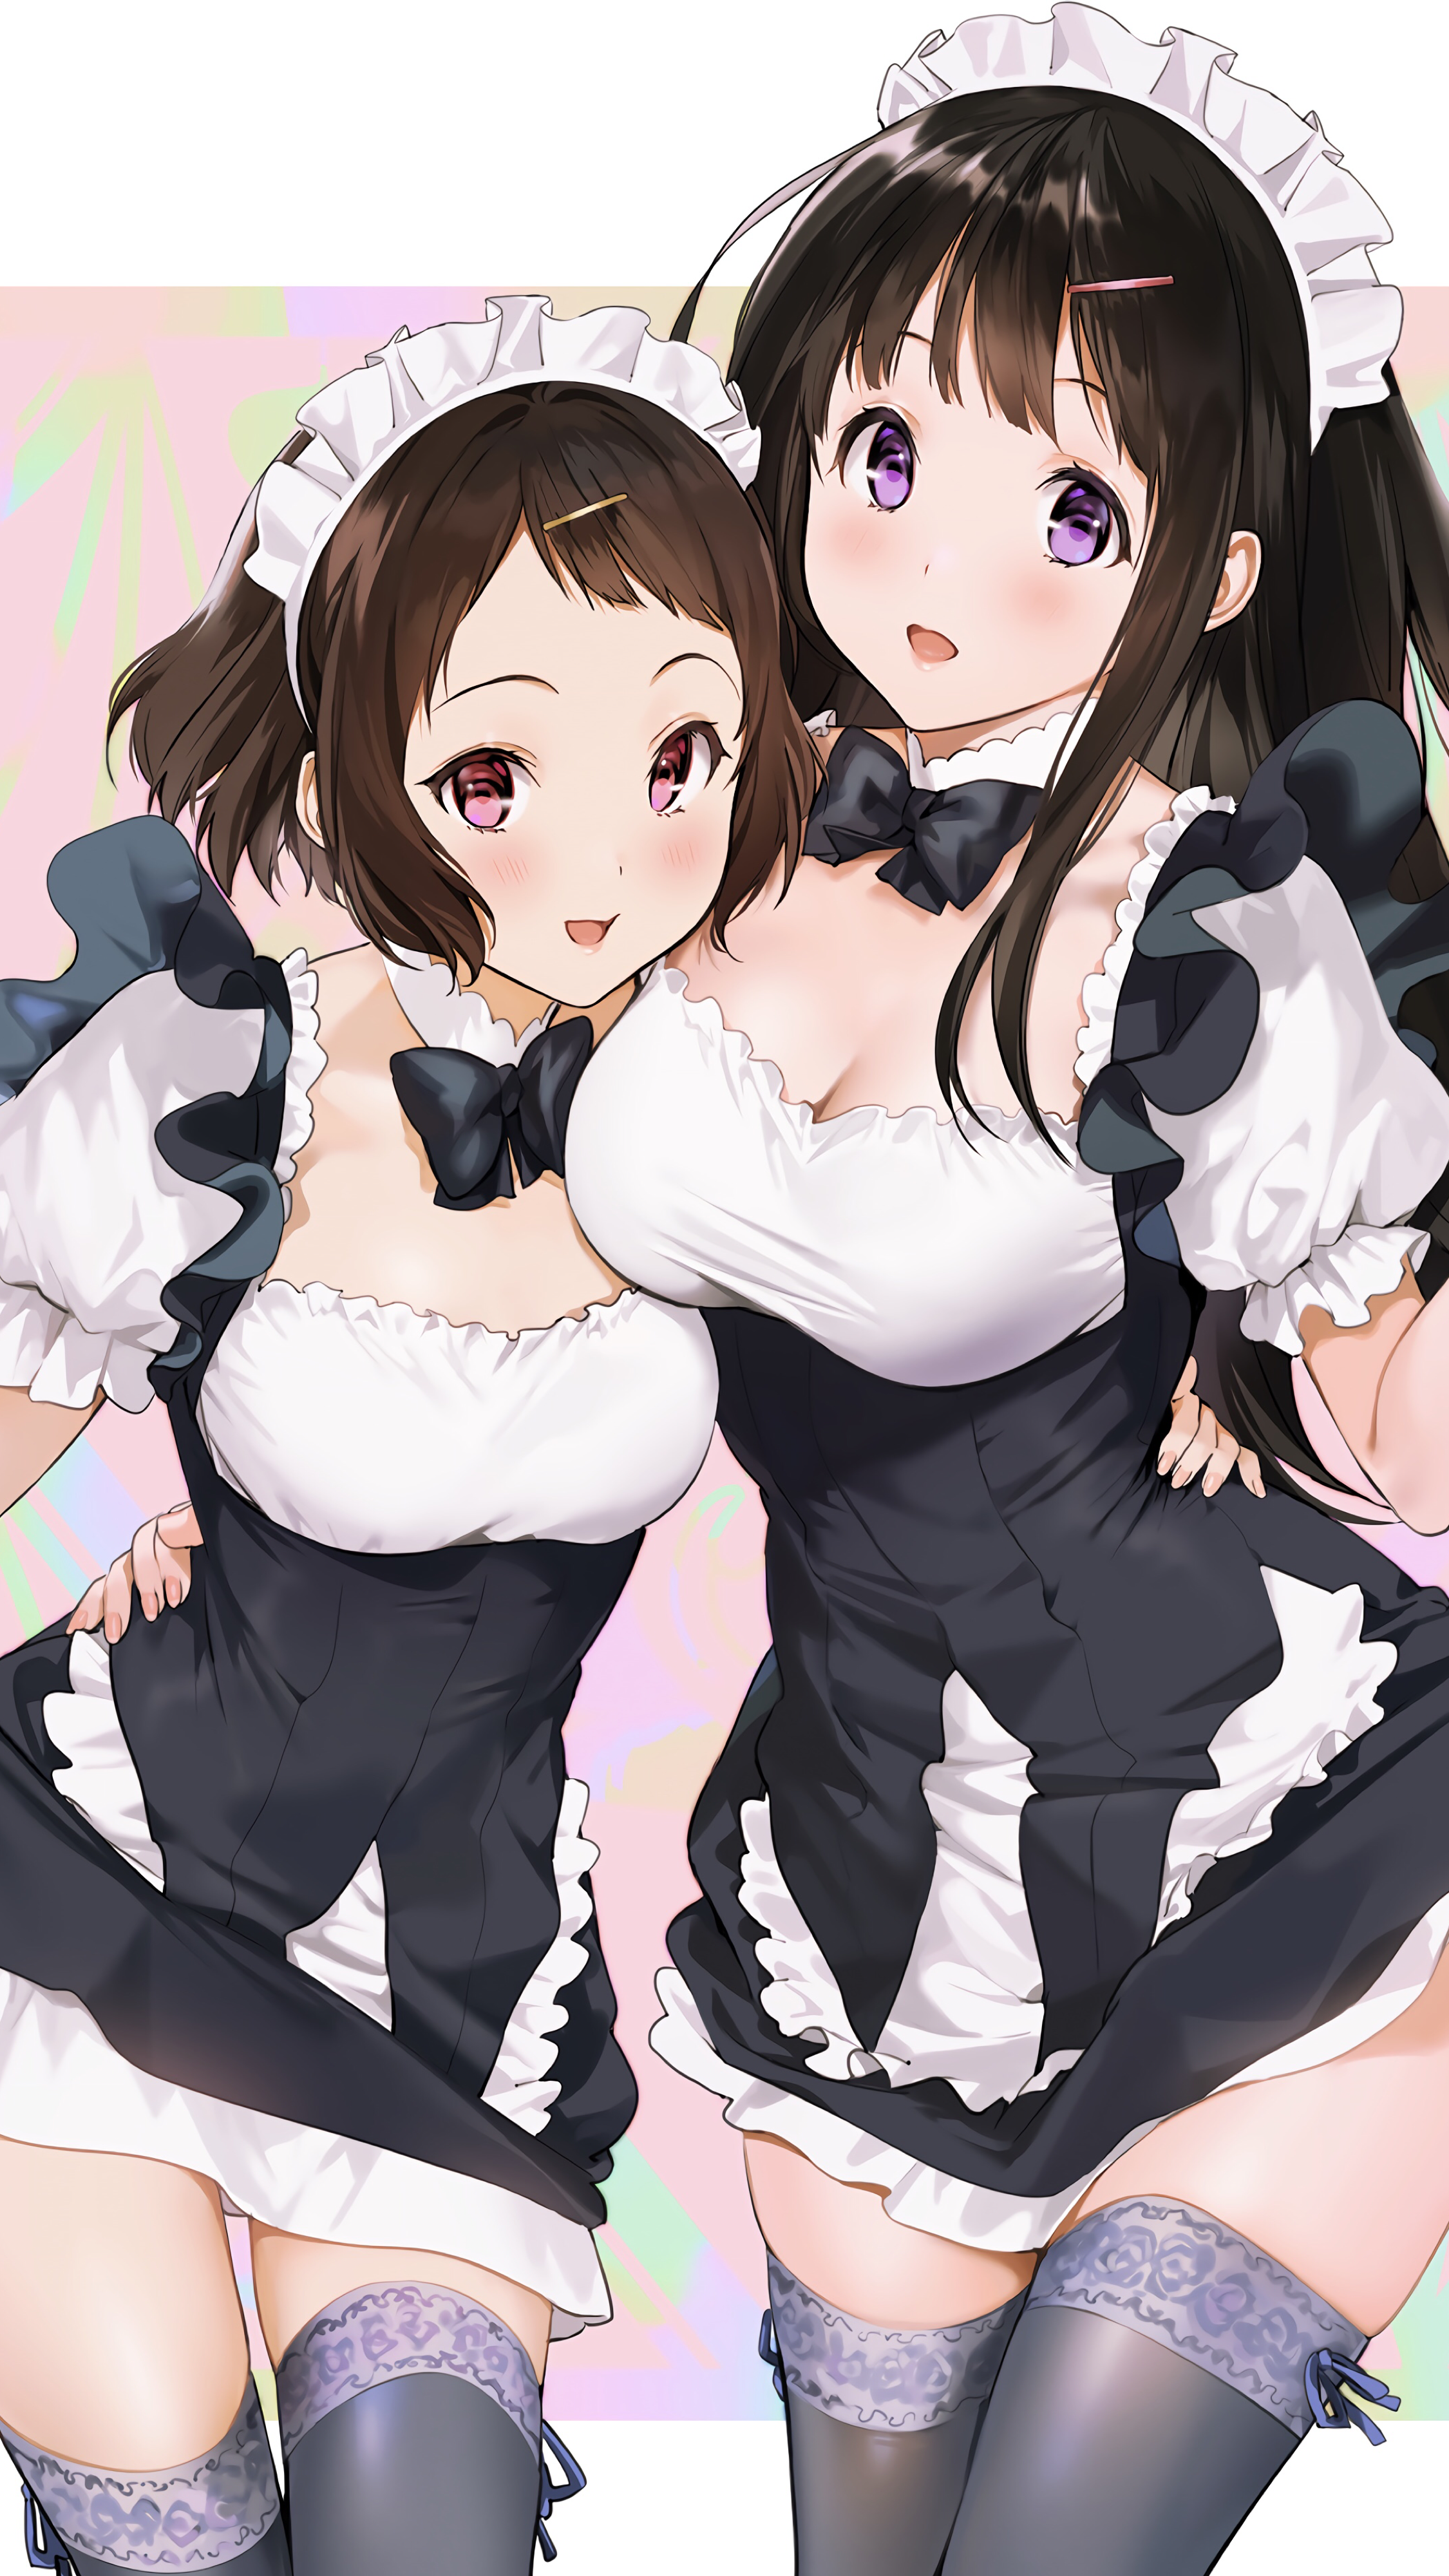 Anime 2250x4000 Chitanda Eru Hyouka anime girls anime fan art maid maid outfit stockings